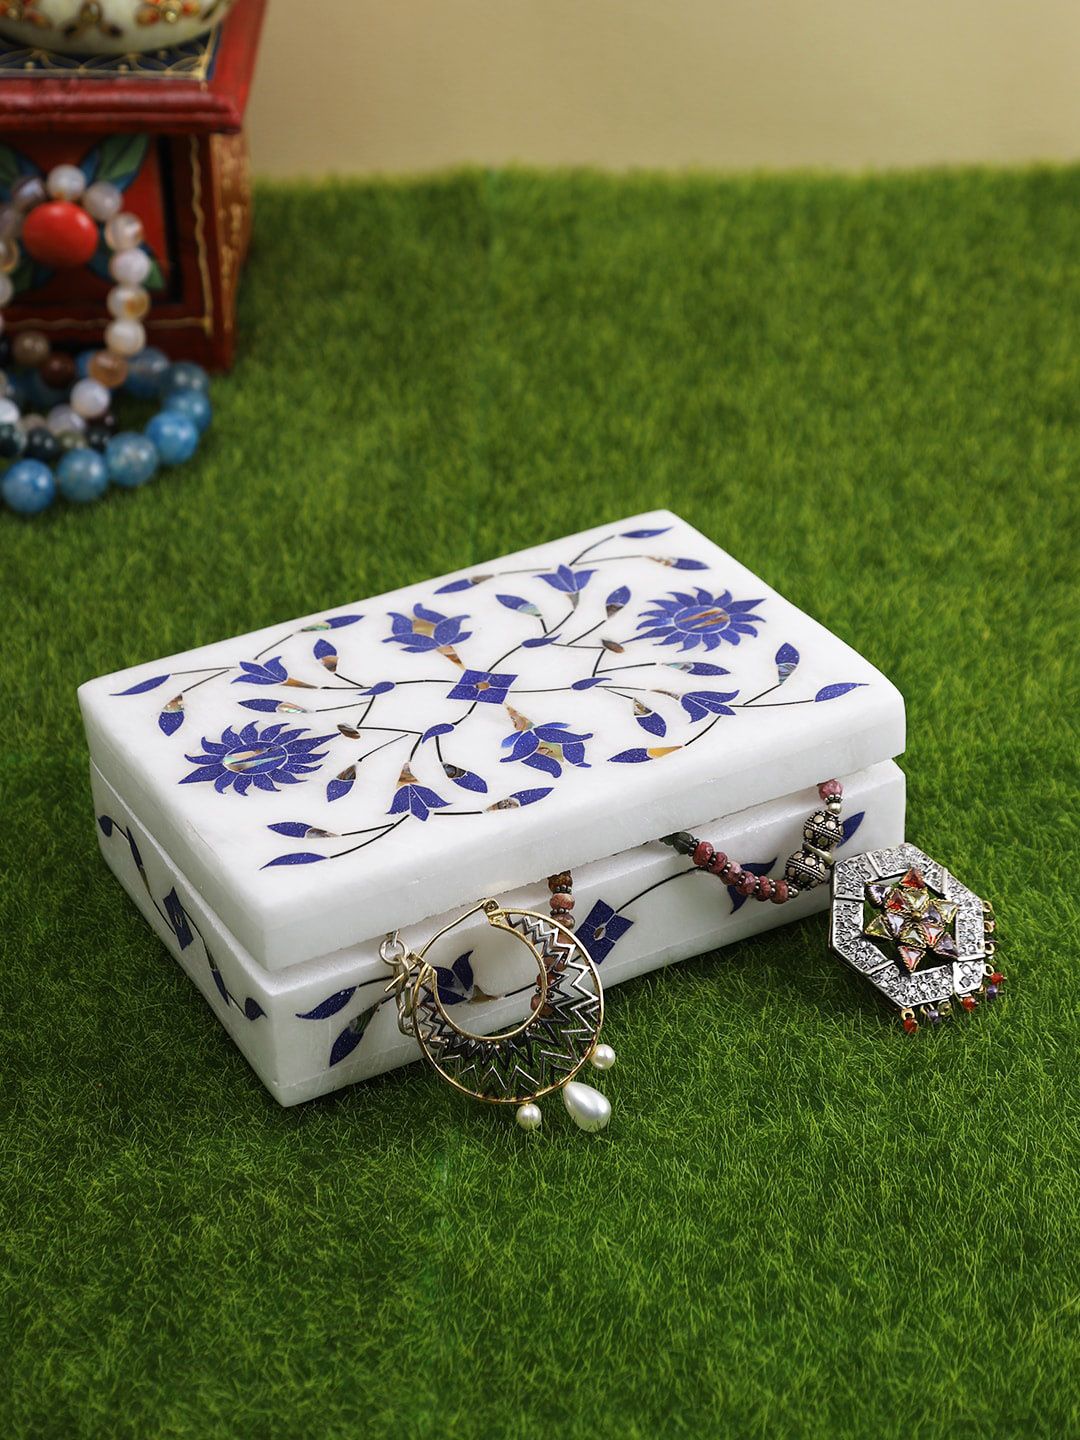 Aapno Rajasthan White & Blue Textured Jewelry Box Organizer Price in India